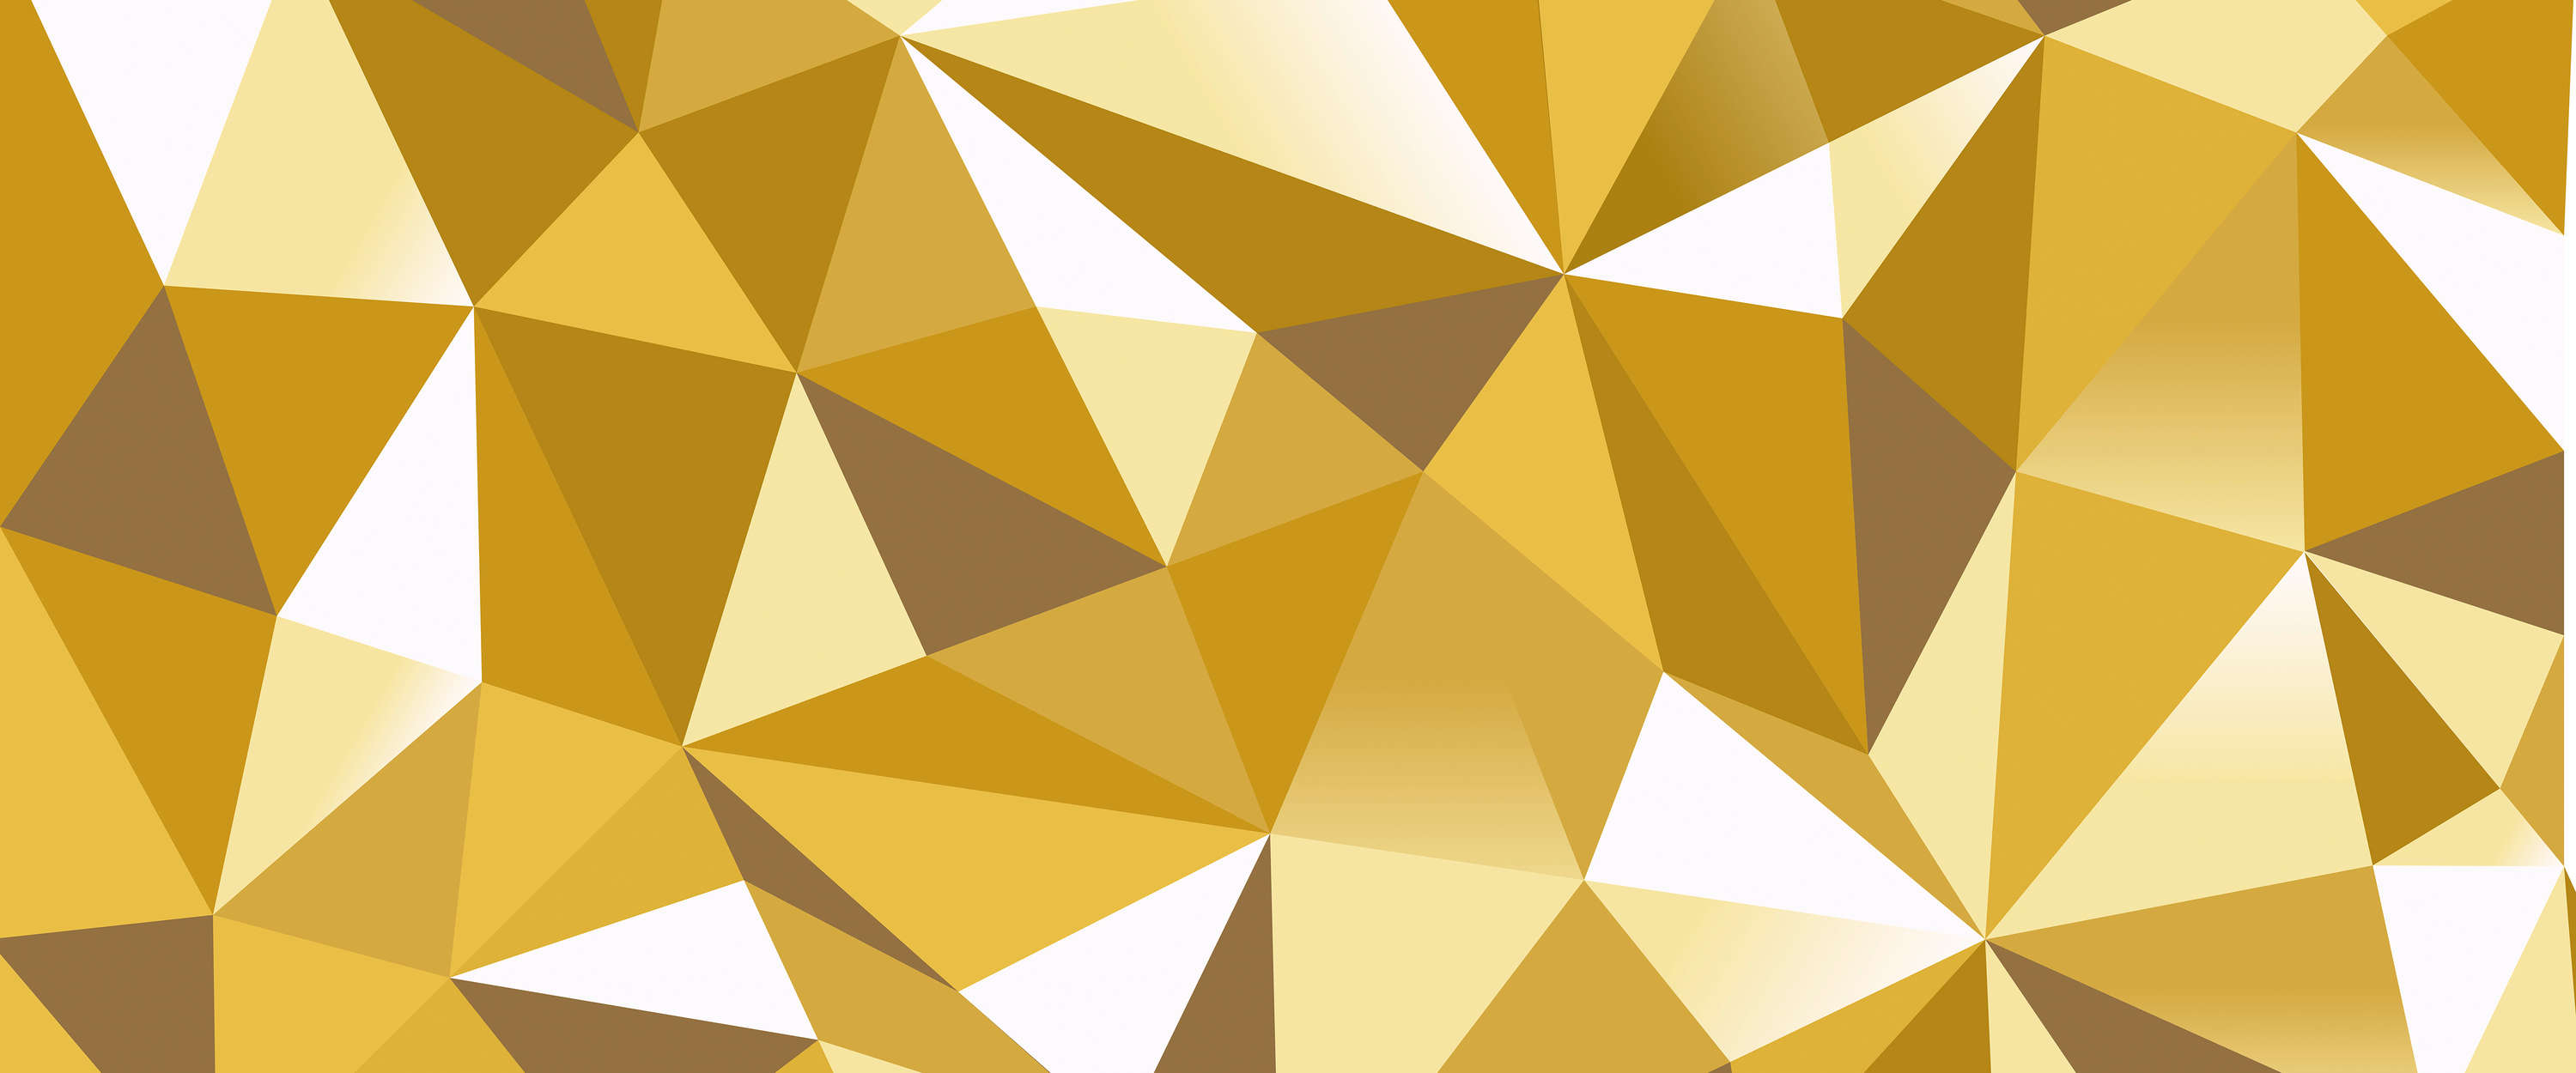             Fototapete im 3D-Look – Polygon Artwork Gold Kristalle
        